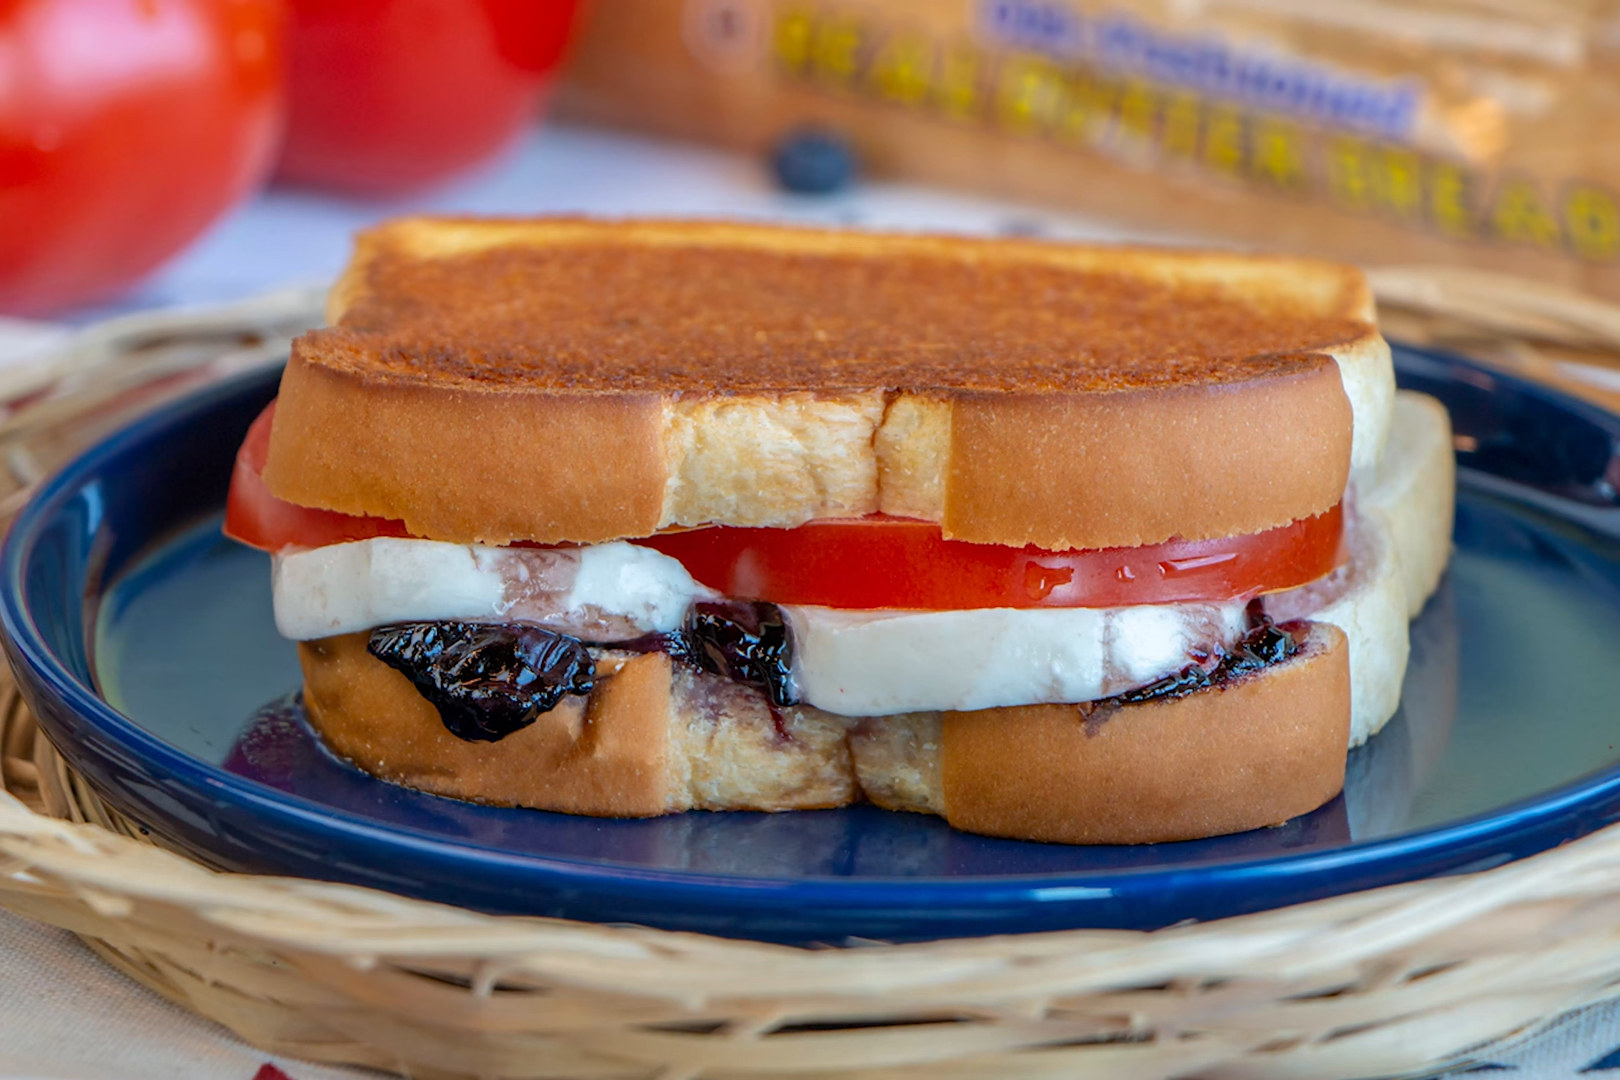 A grilled sandwich with mozzarella and tomato